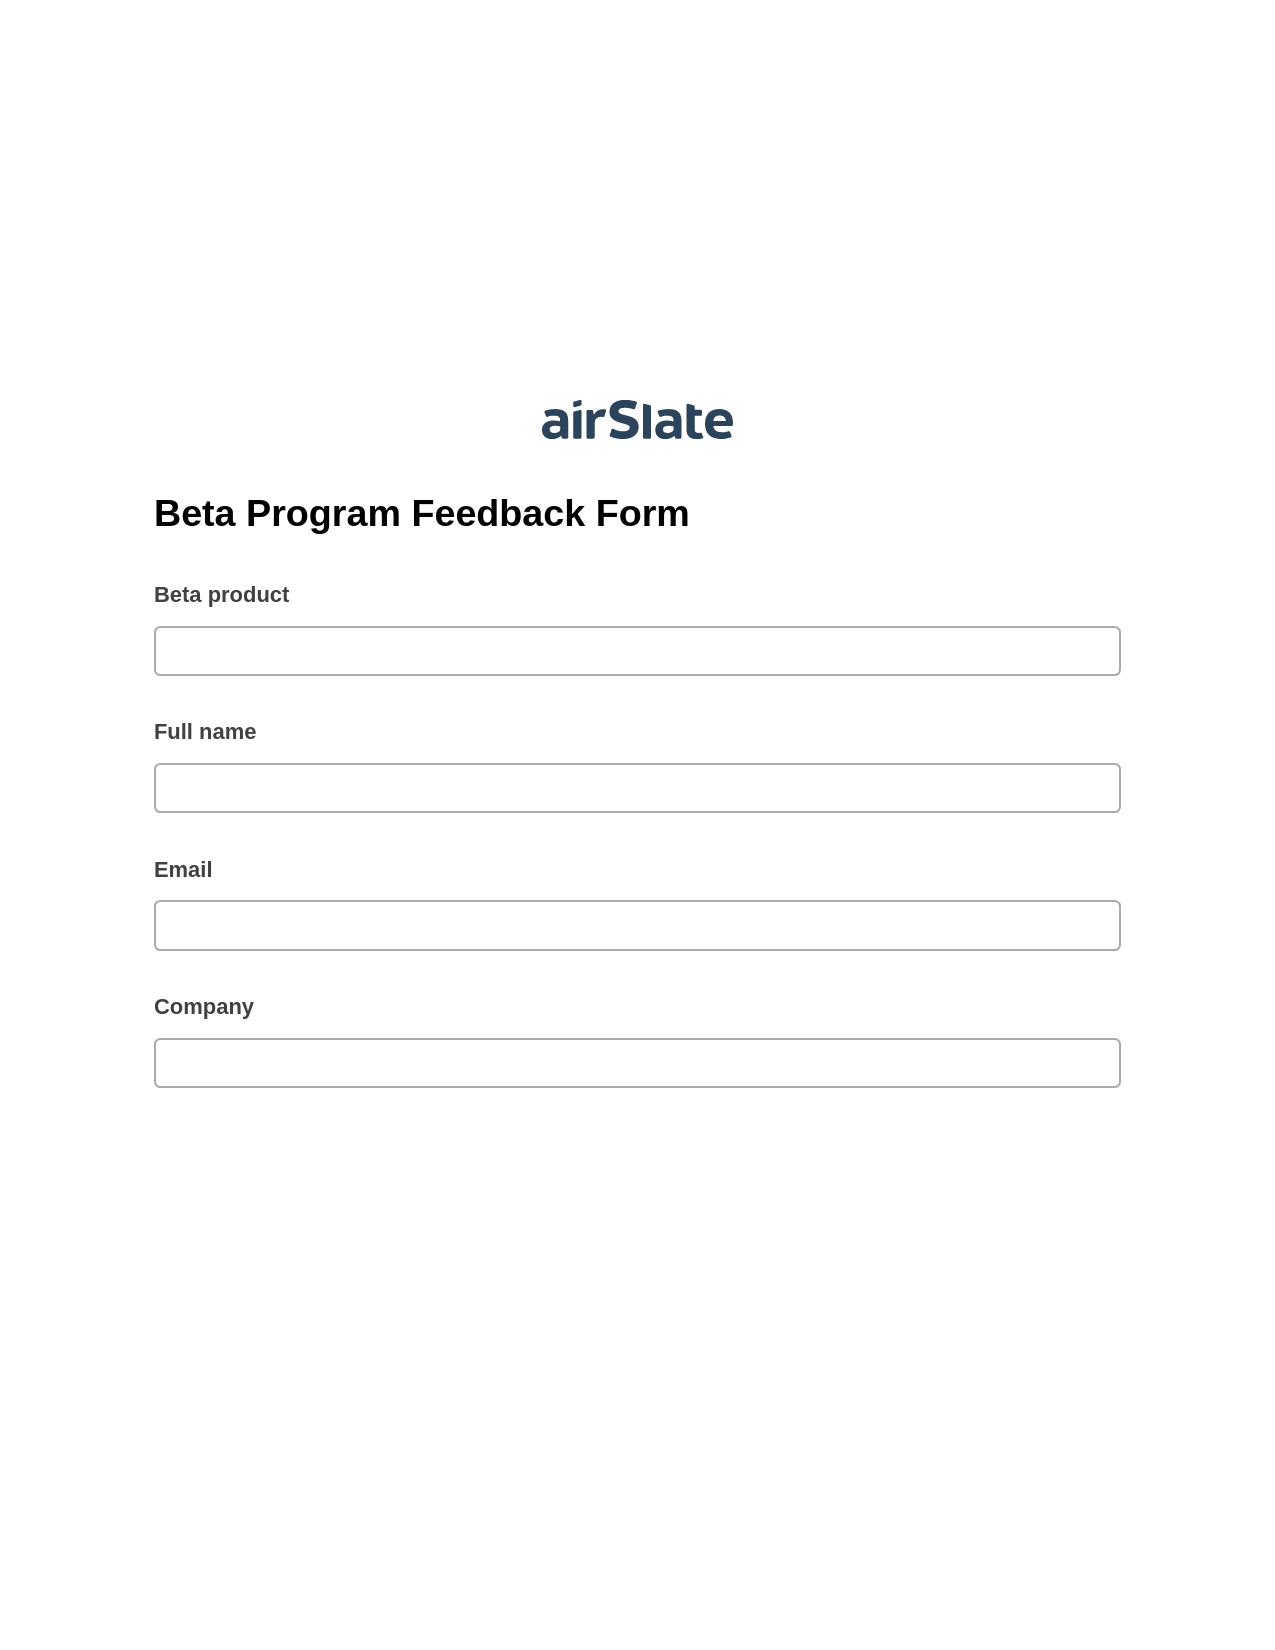 Beta Program Feedback Form Pre-fill from Salesforce Record Bot, Remove Slate Bot, Webhook Postfinish Bot